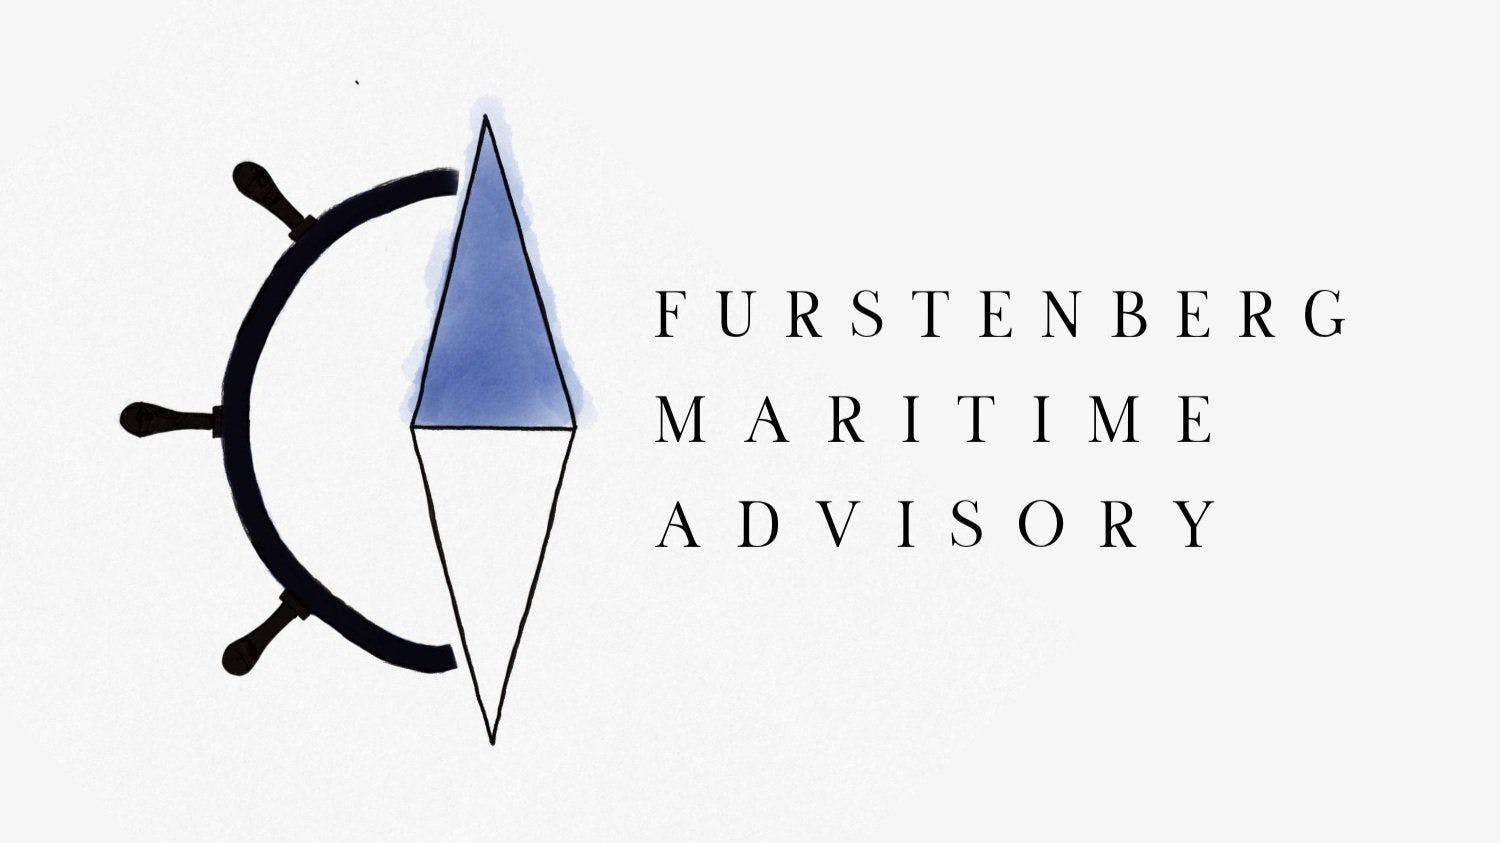 Furstenberg maritime